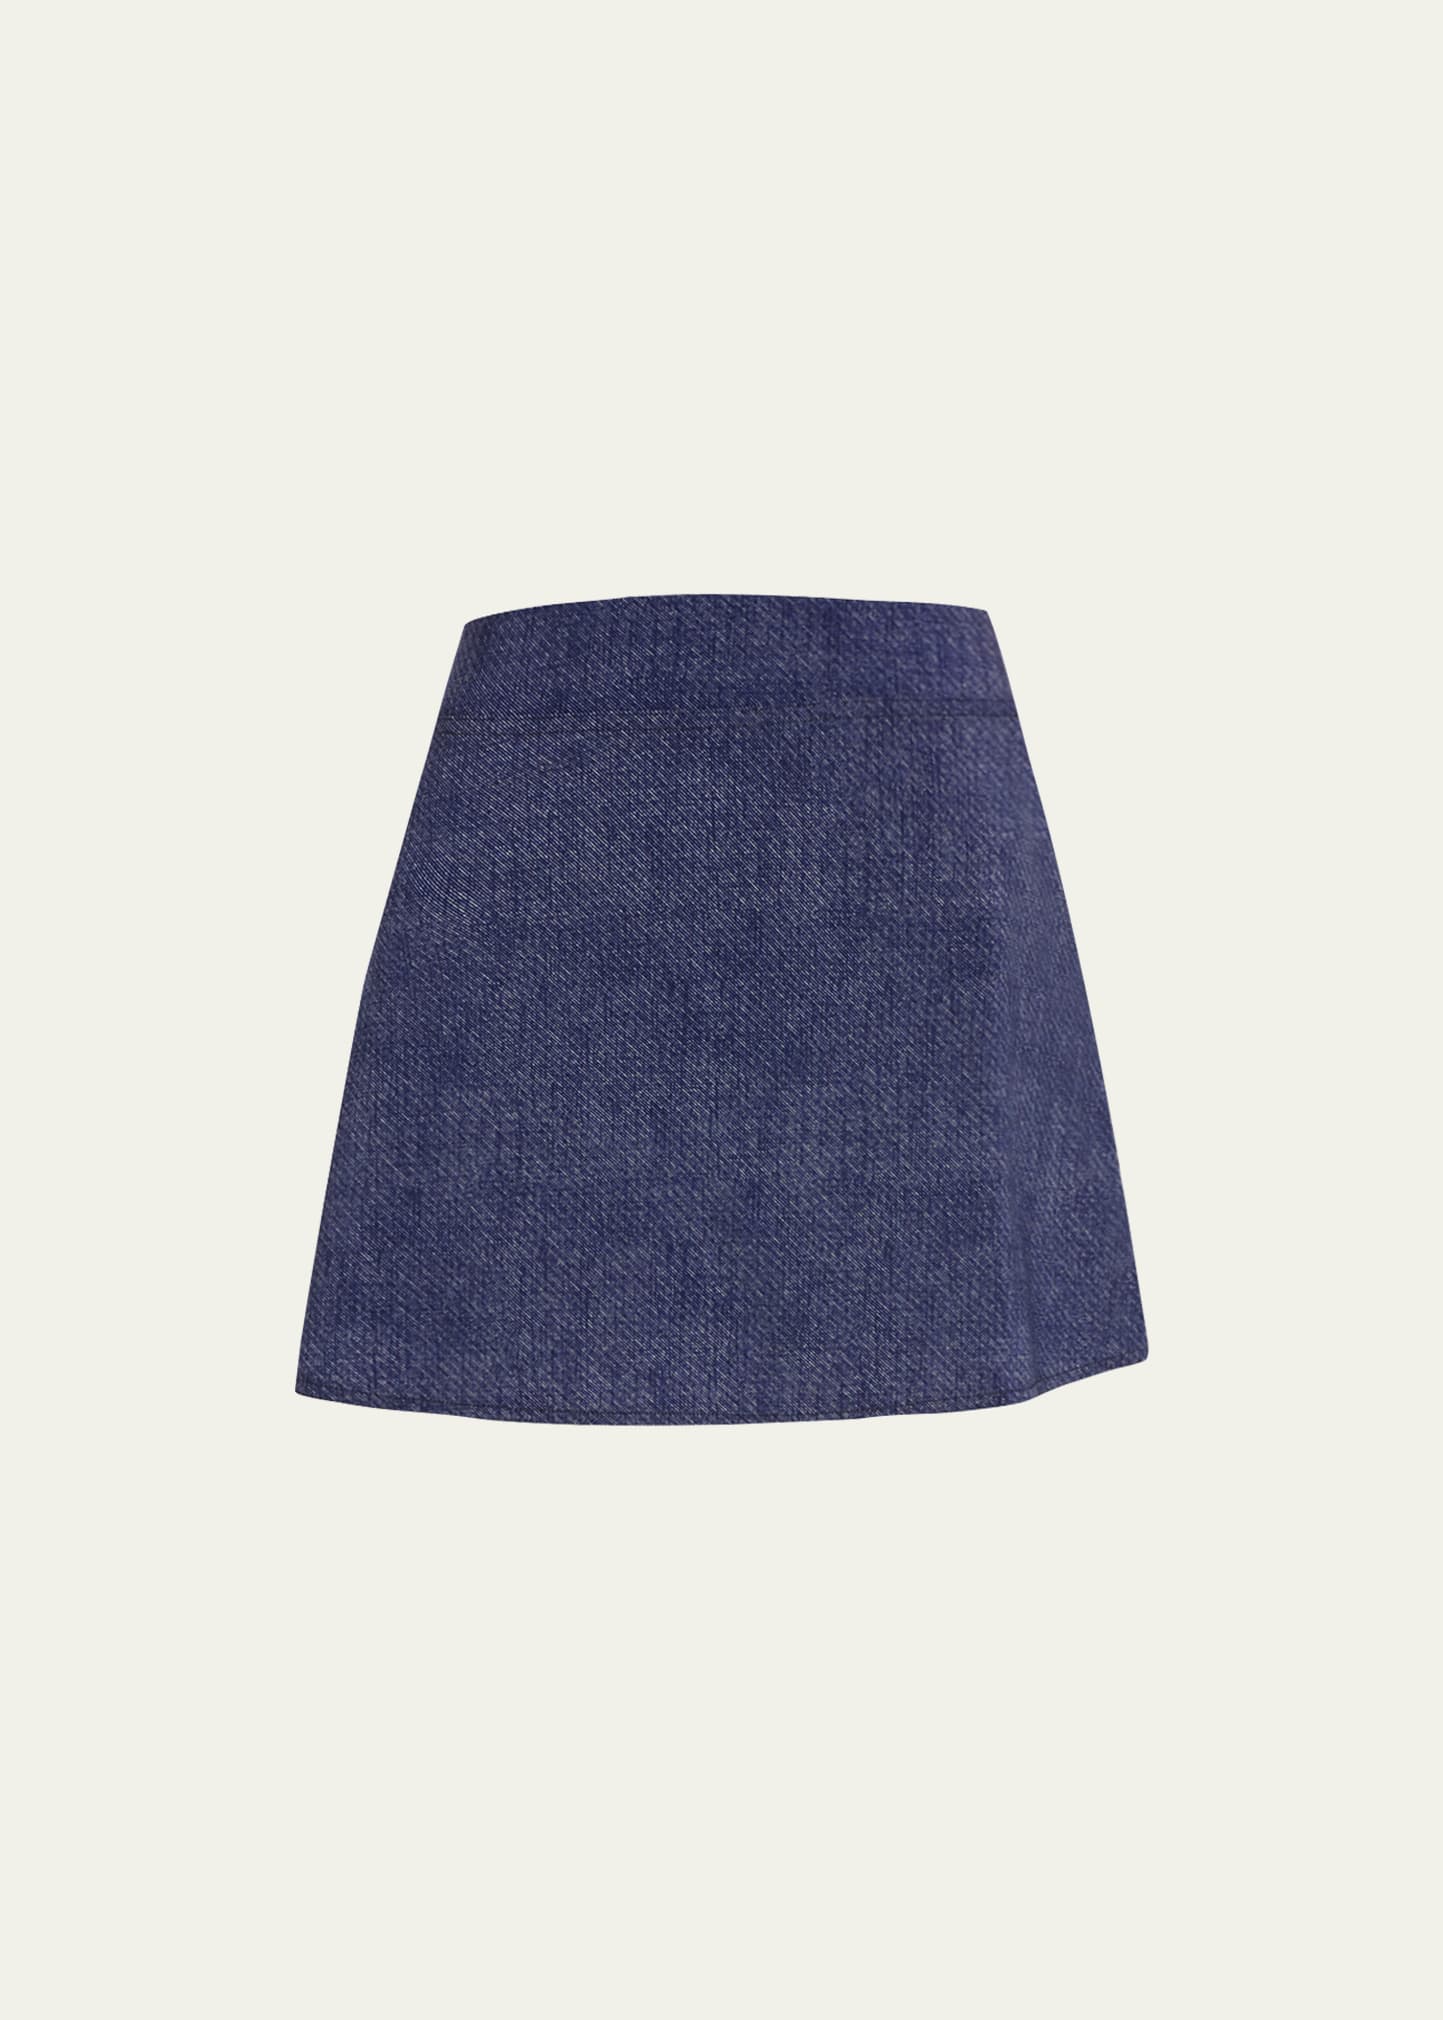 Nori A-Line Denim Mini Skirt